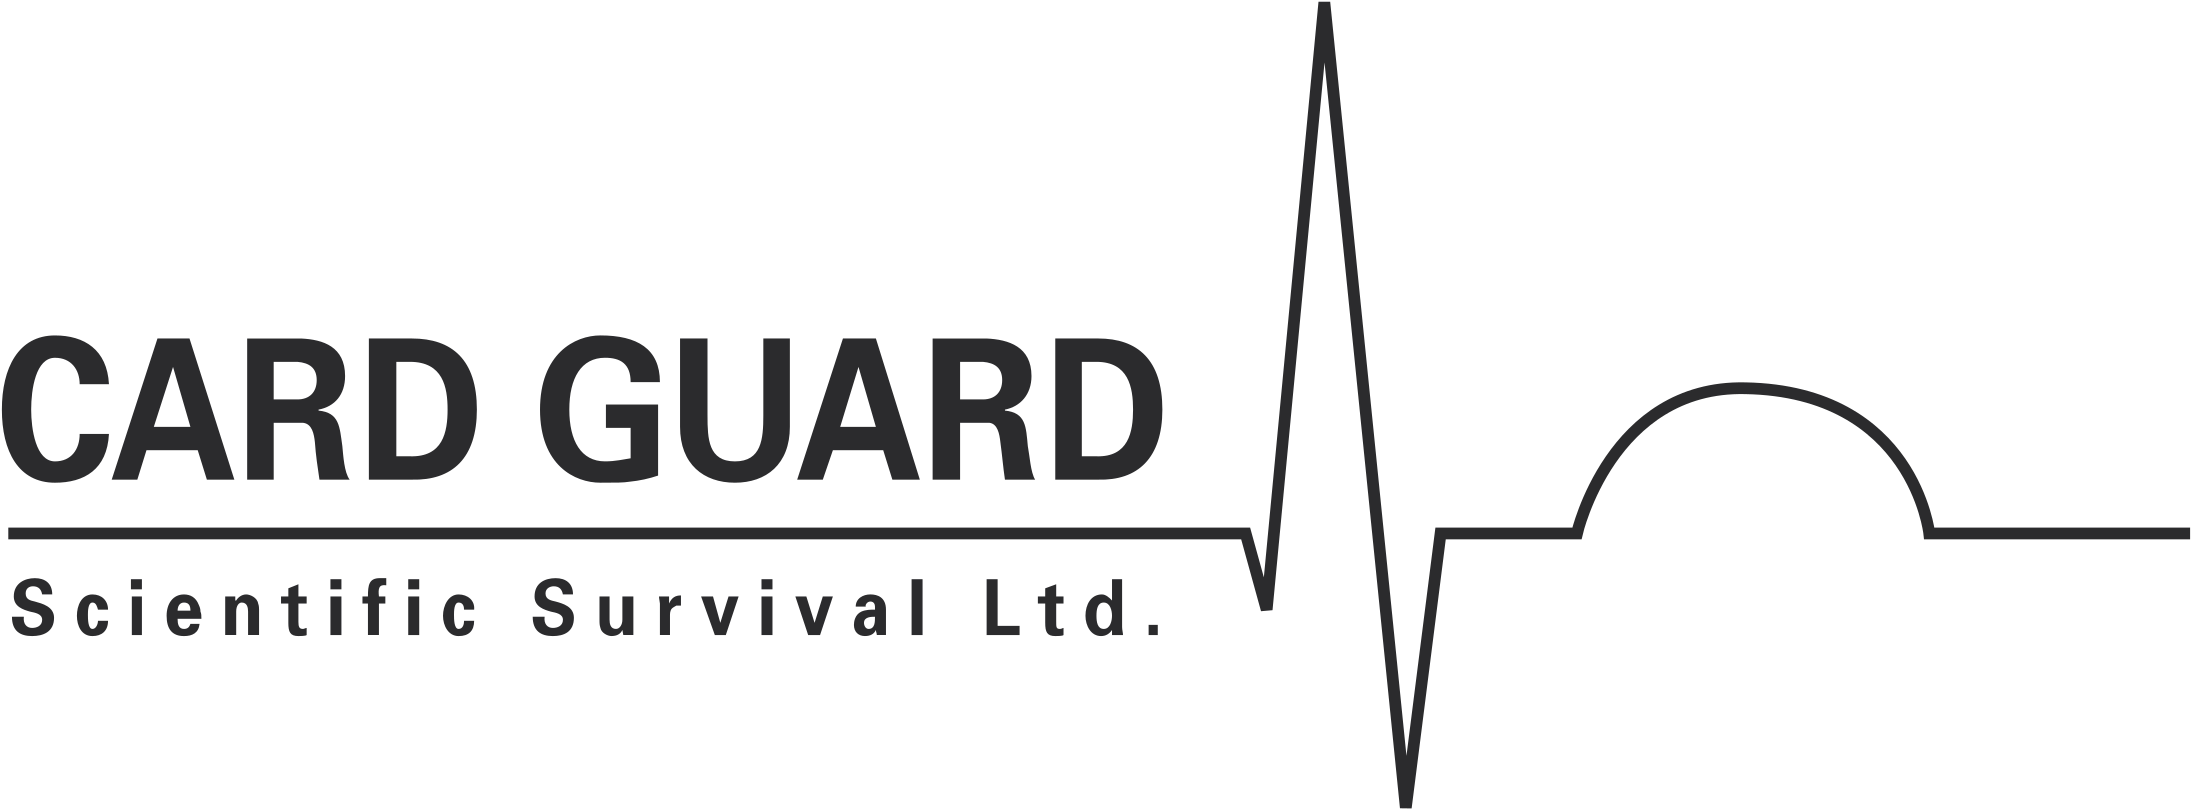 Card Guard Scientific Survival Logo Png Transparent - Science (2400x2400), Png Download